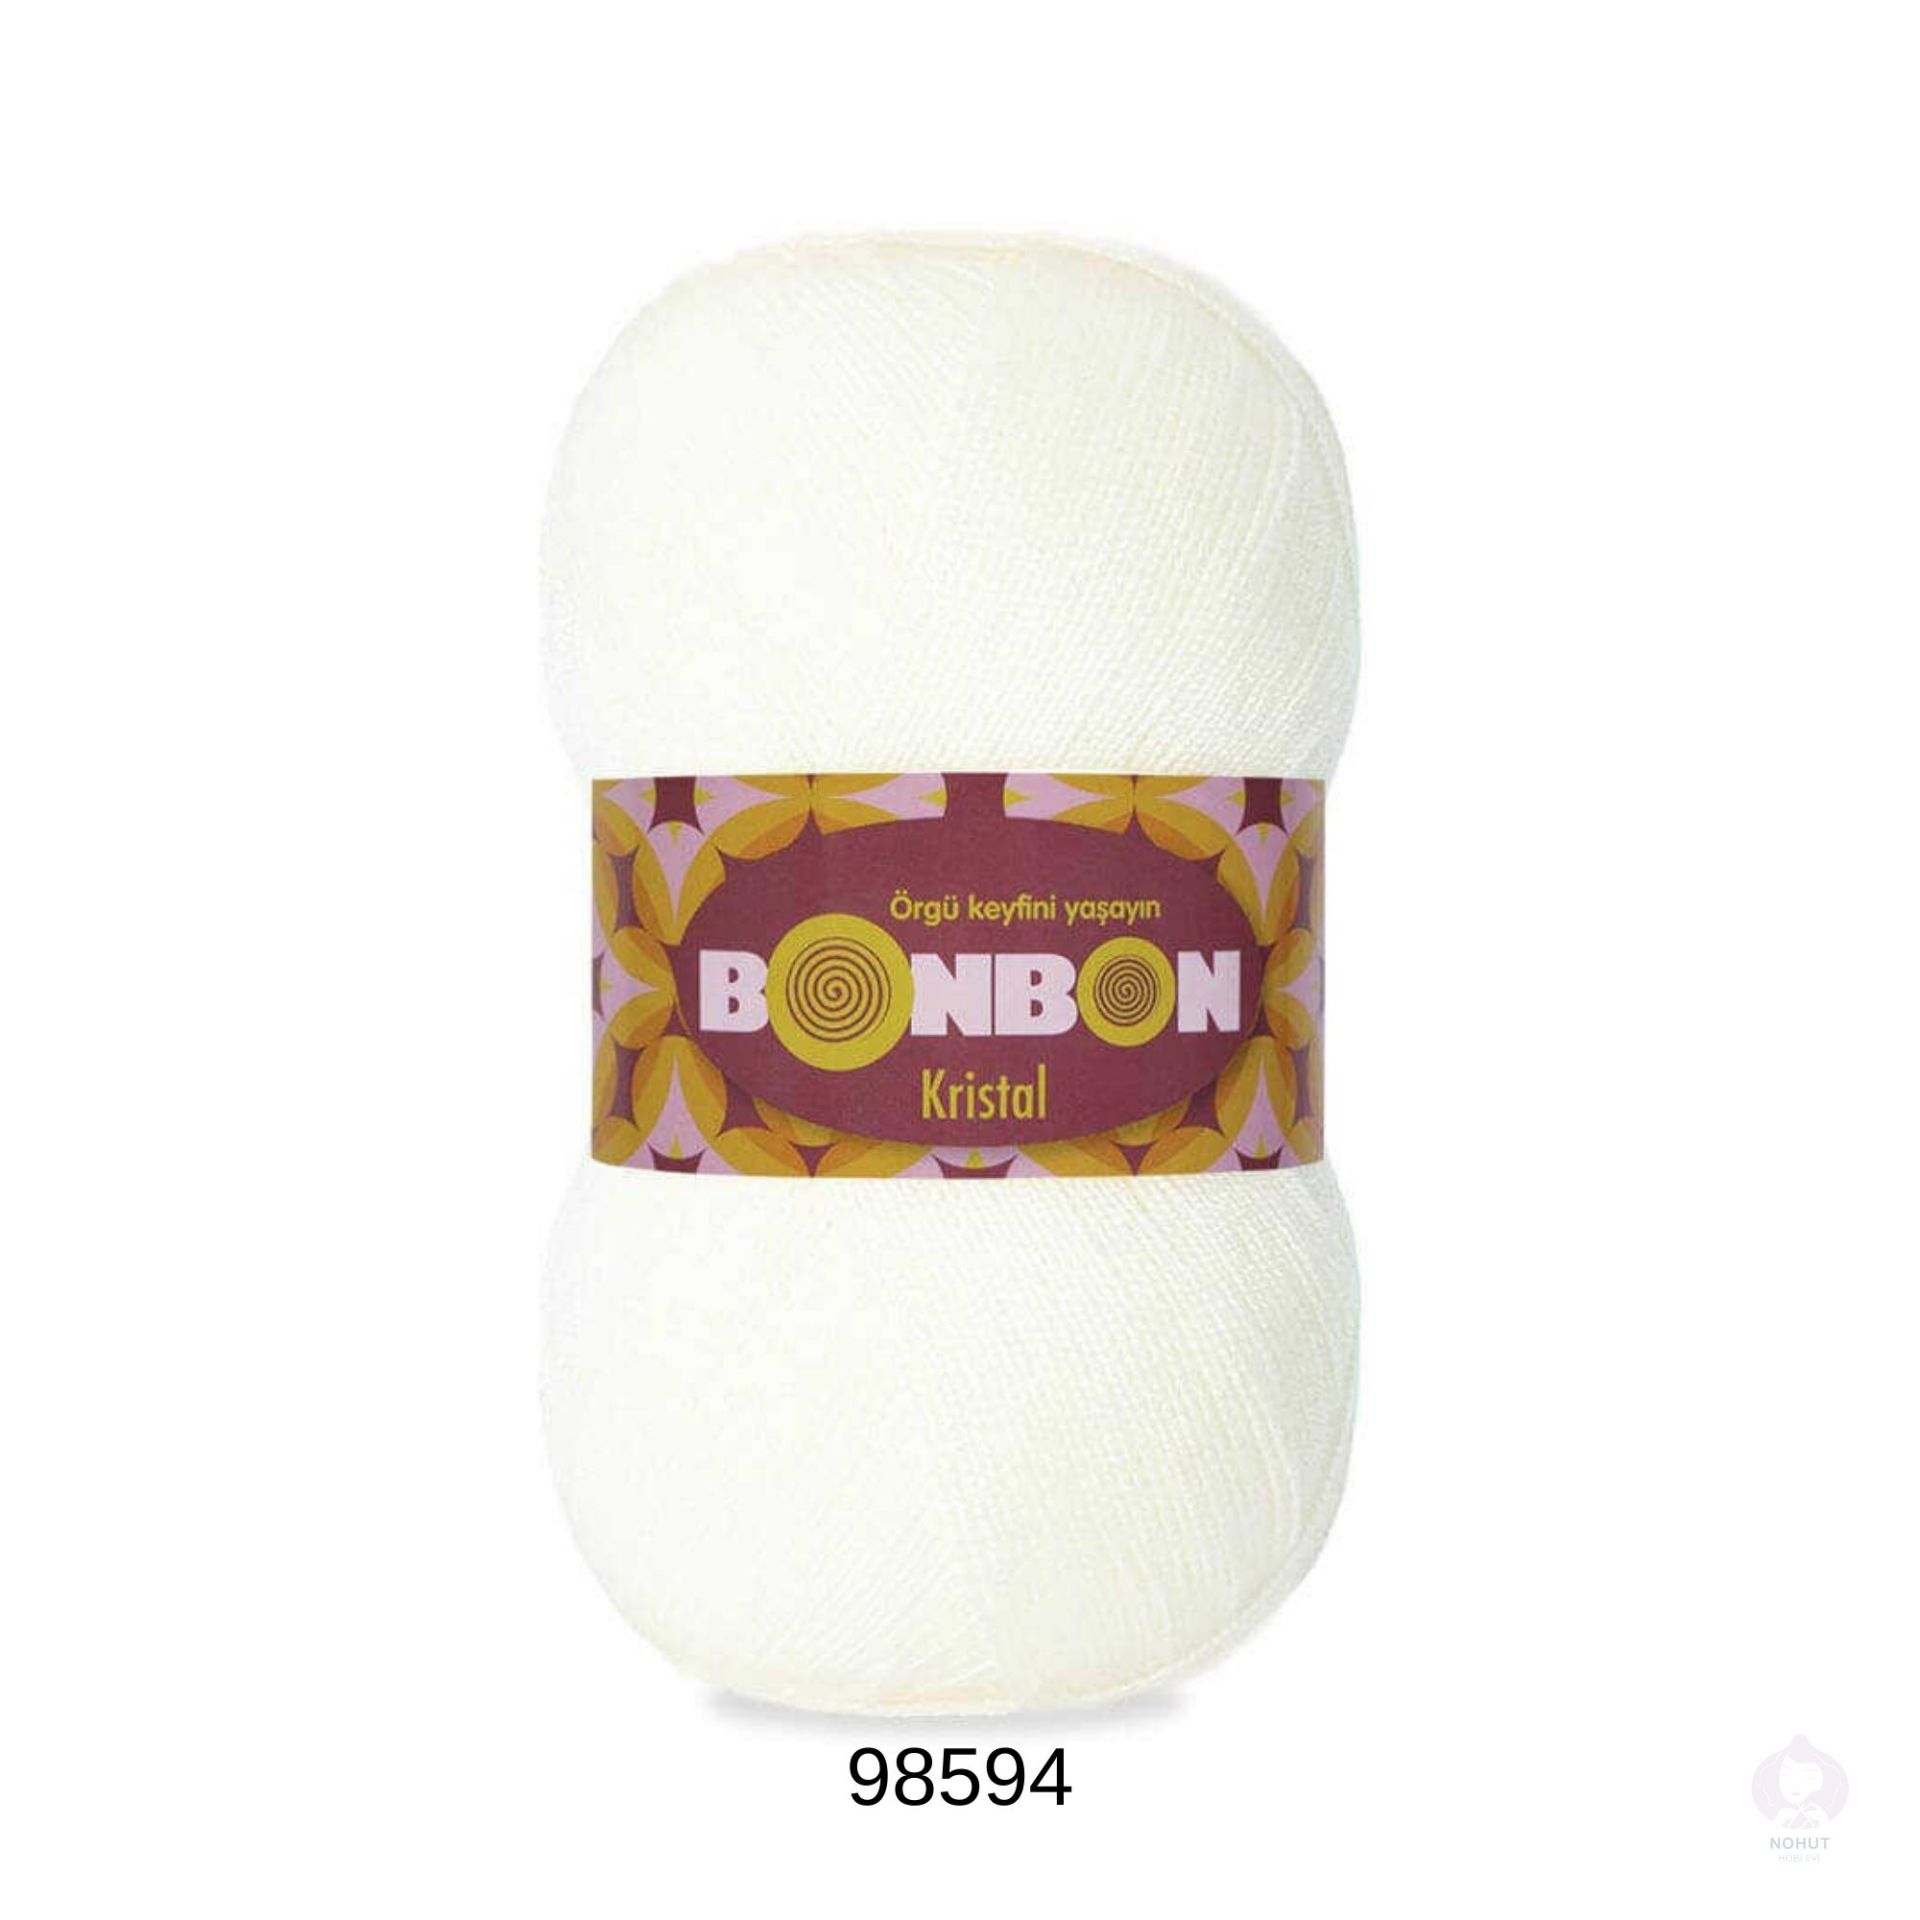 BonBon Kristal 98594